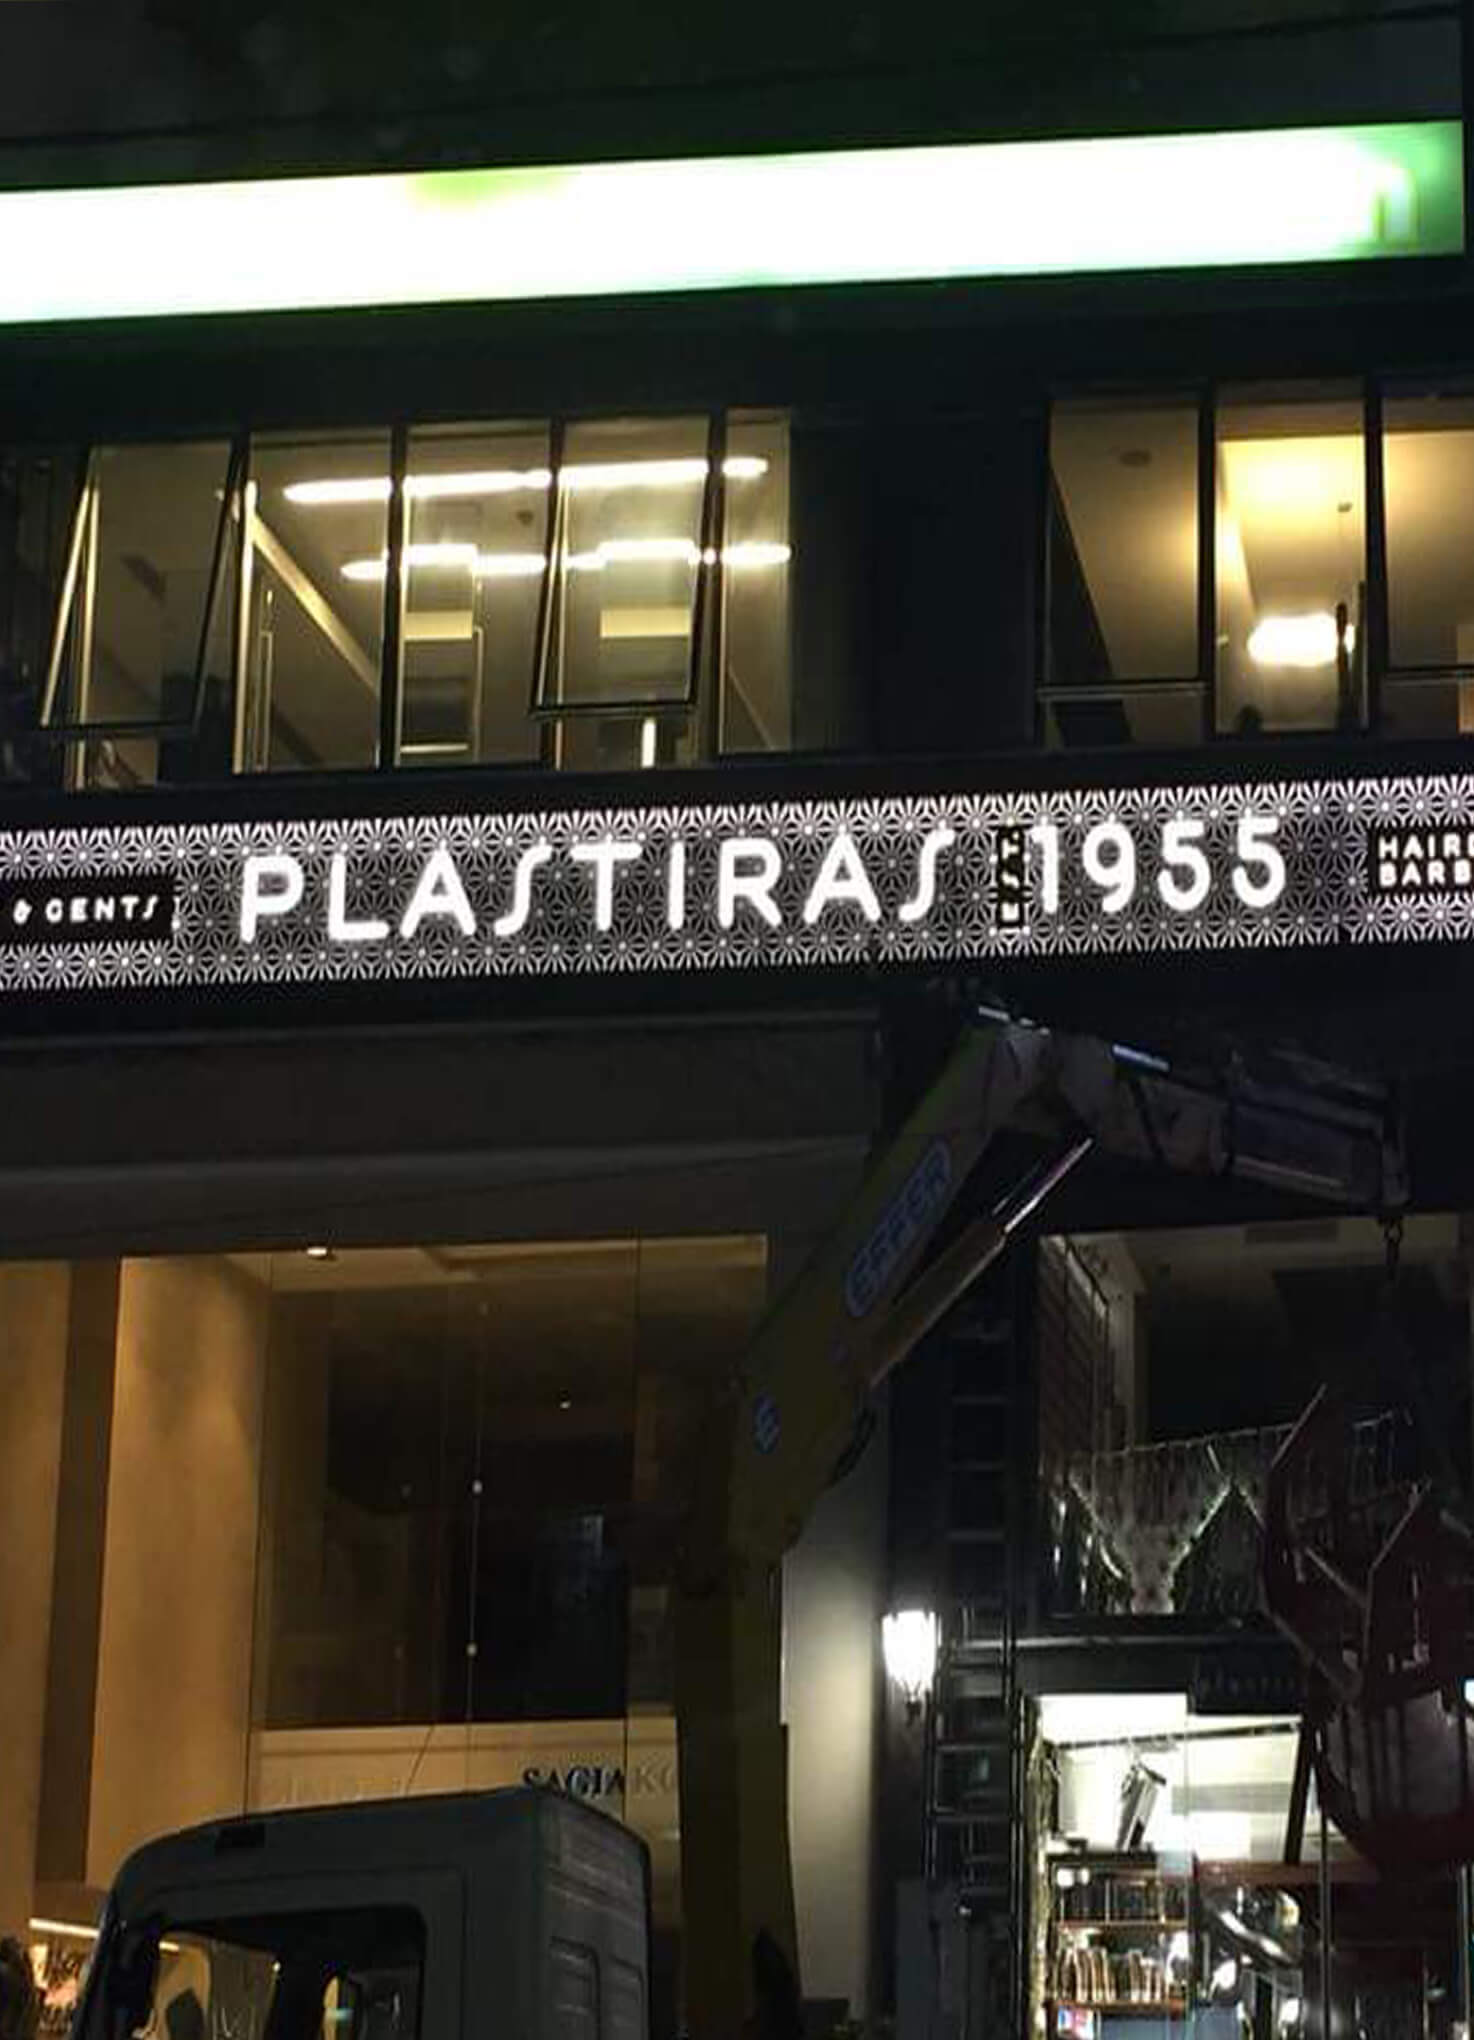 2017 - "Plastiras 1955" Sign installation on the facade.